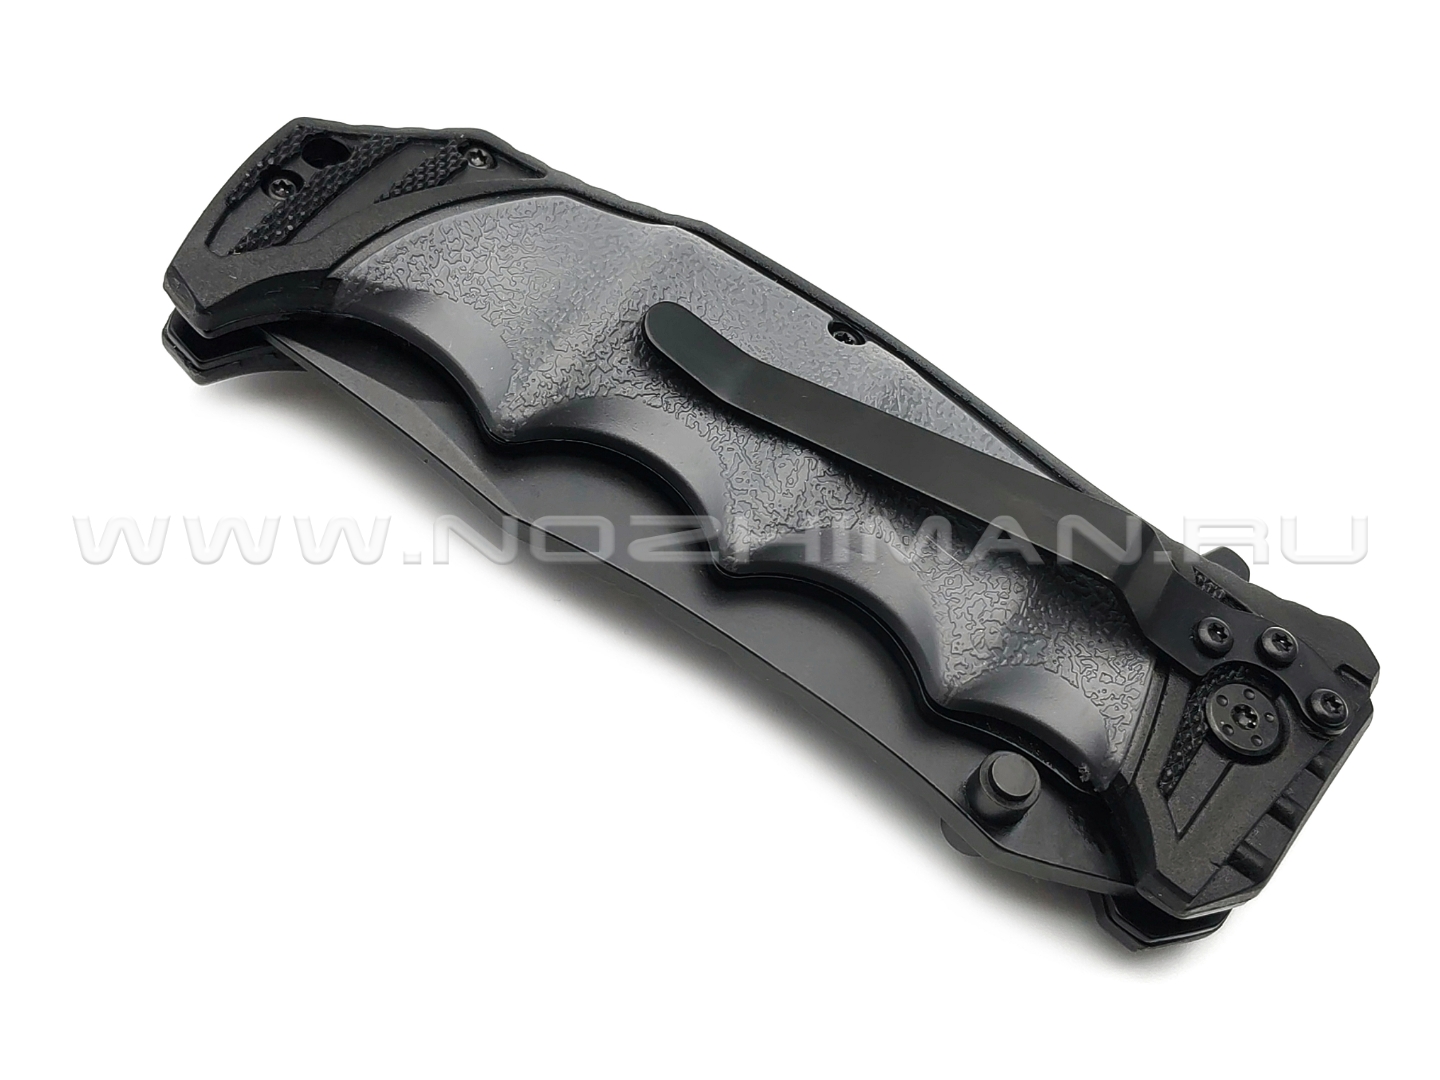 WithArmour складной нож Lion Claw Black & Grey WA-018BG сталь 440C, рукоять Rubber, Nylon Fiber